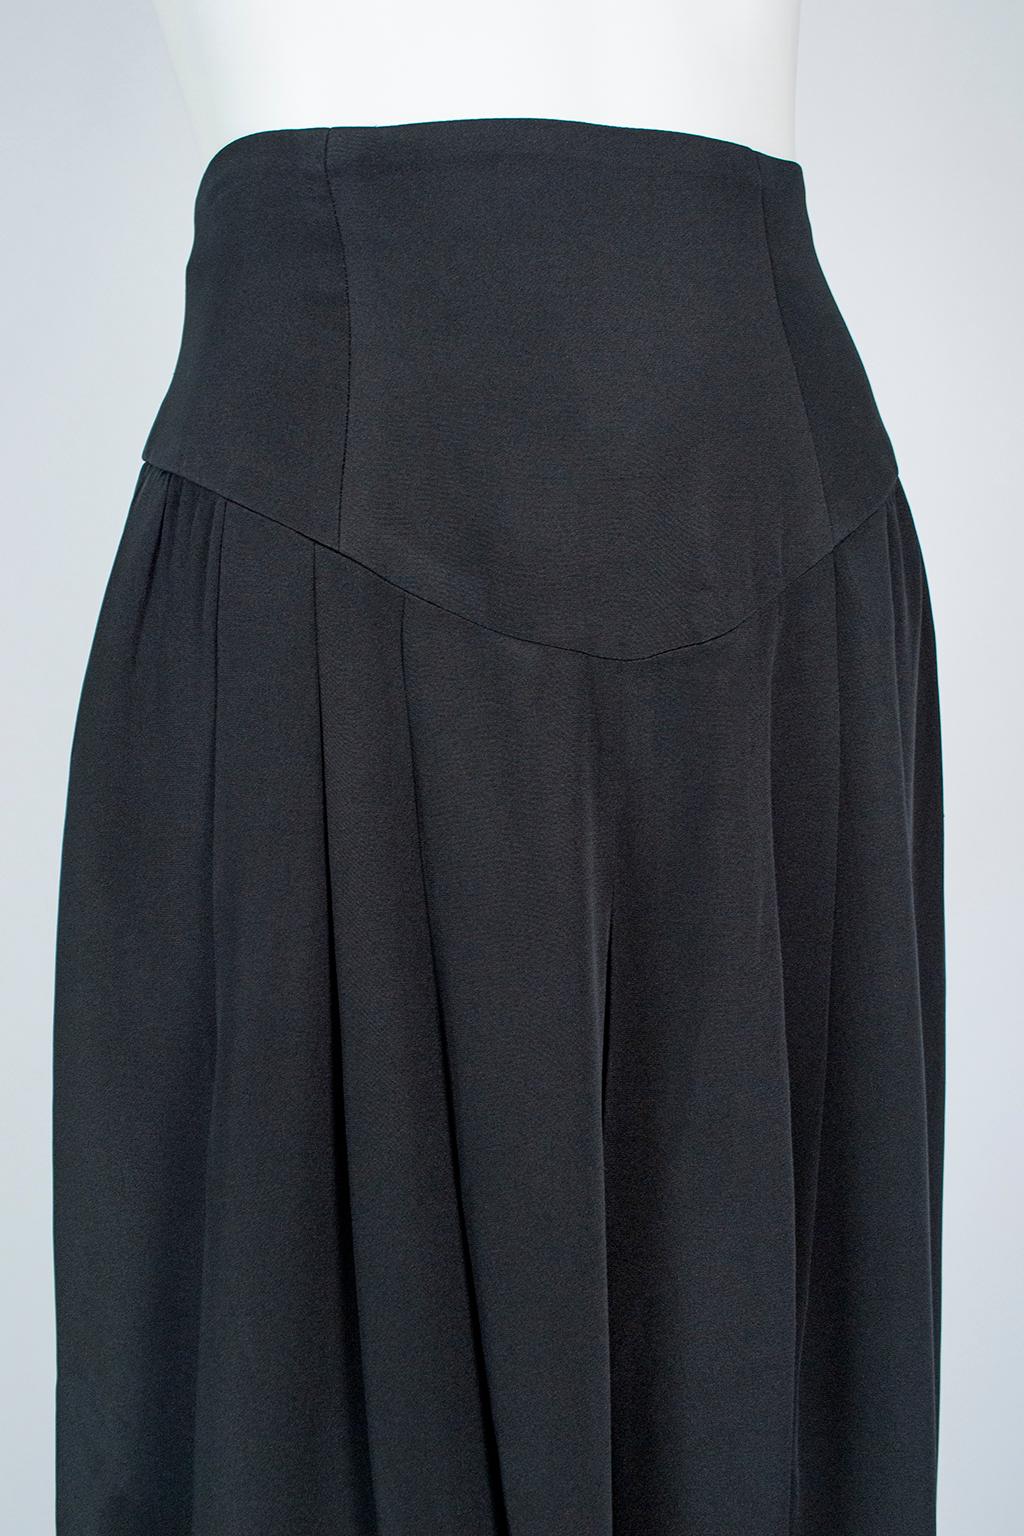 Black Silk Wide Leg Culottes with Cummerbund Girdle Waist – Medium, 1980s 1